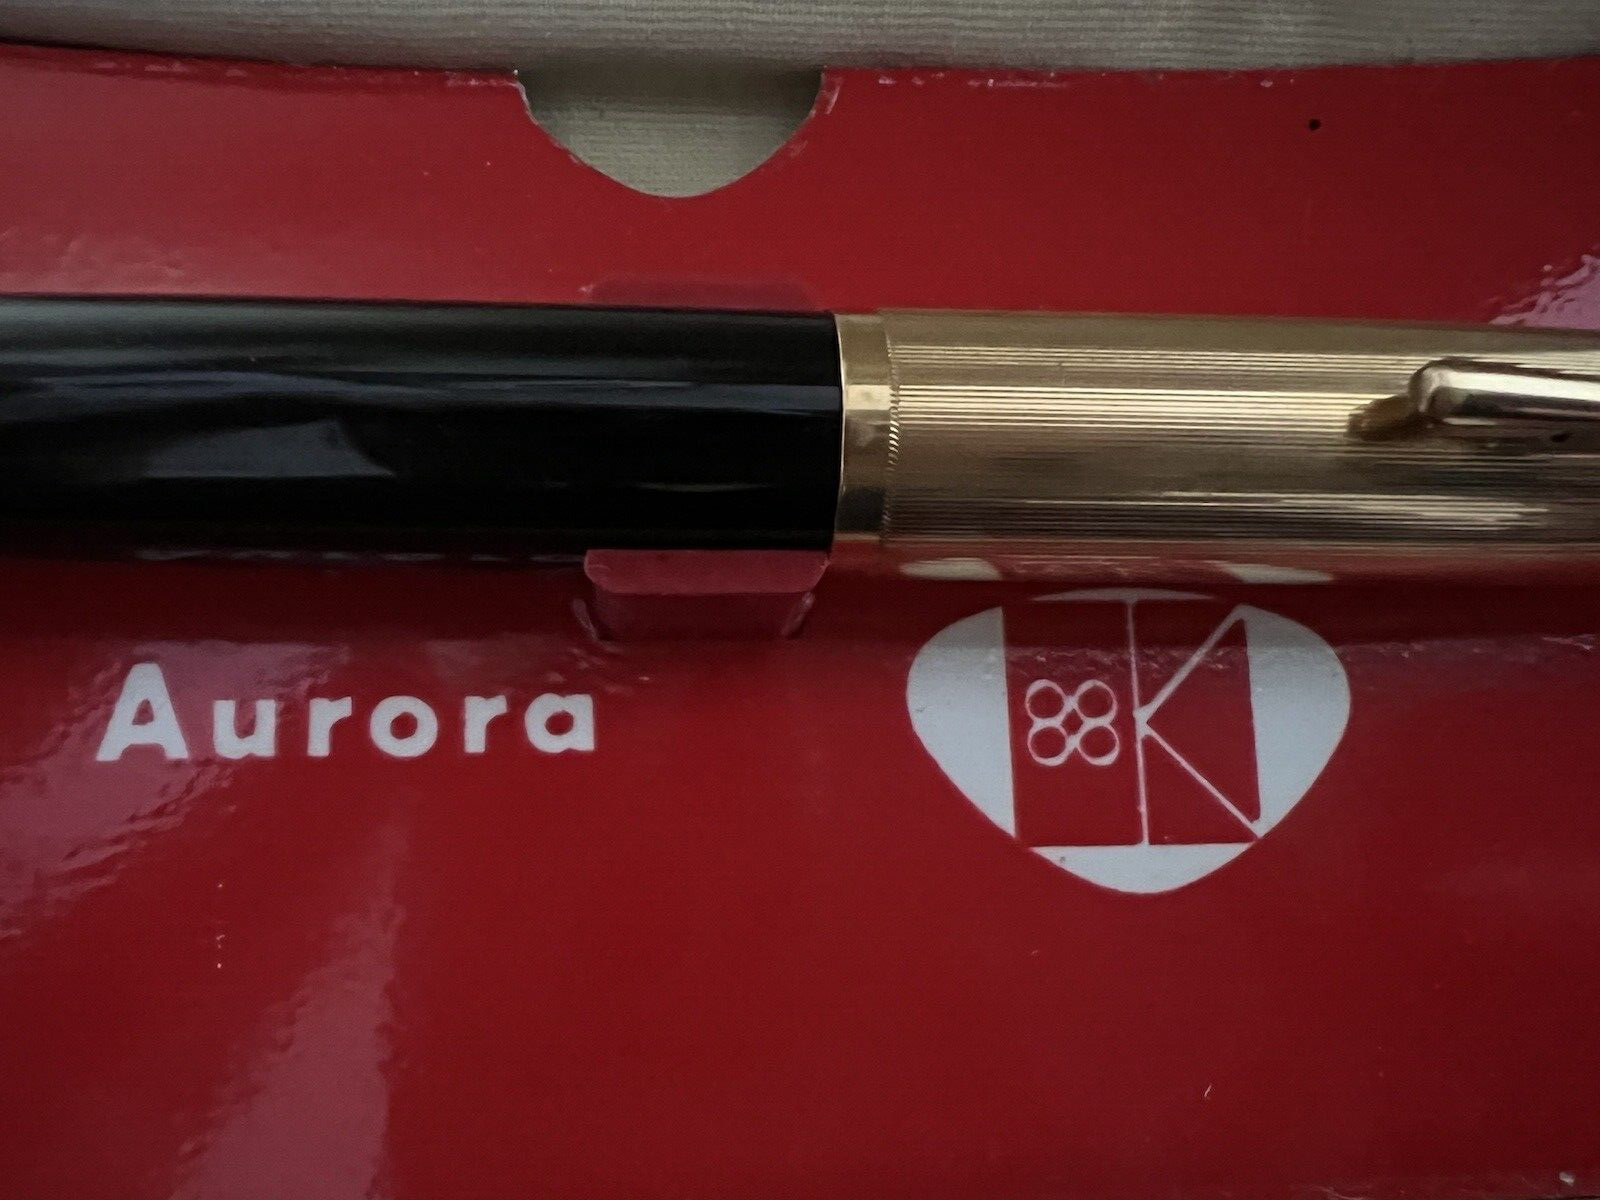 Aurora 88K Pen Fountain Pen Gold IN Plunger Marking Box Instructions